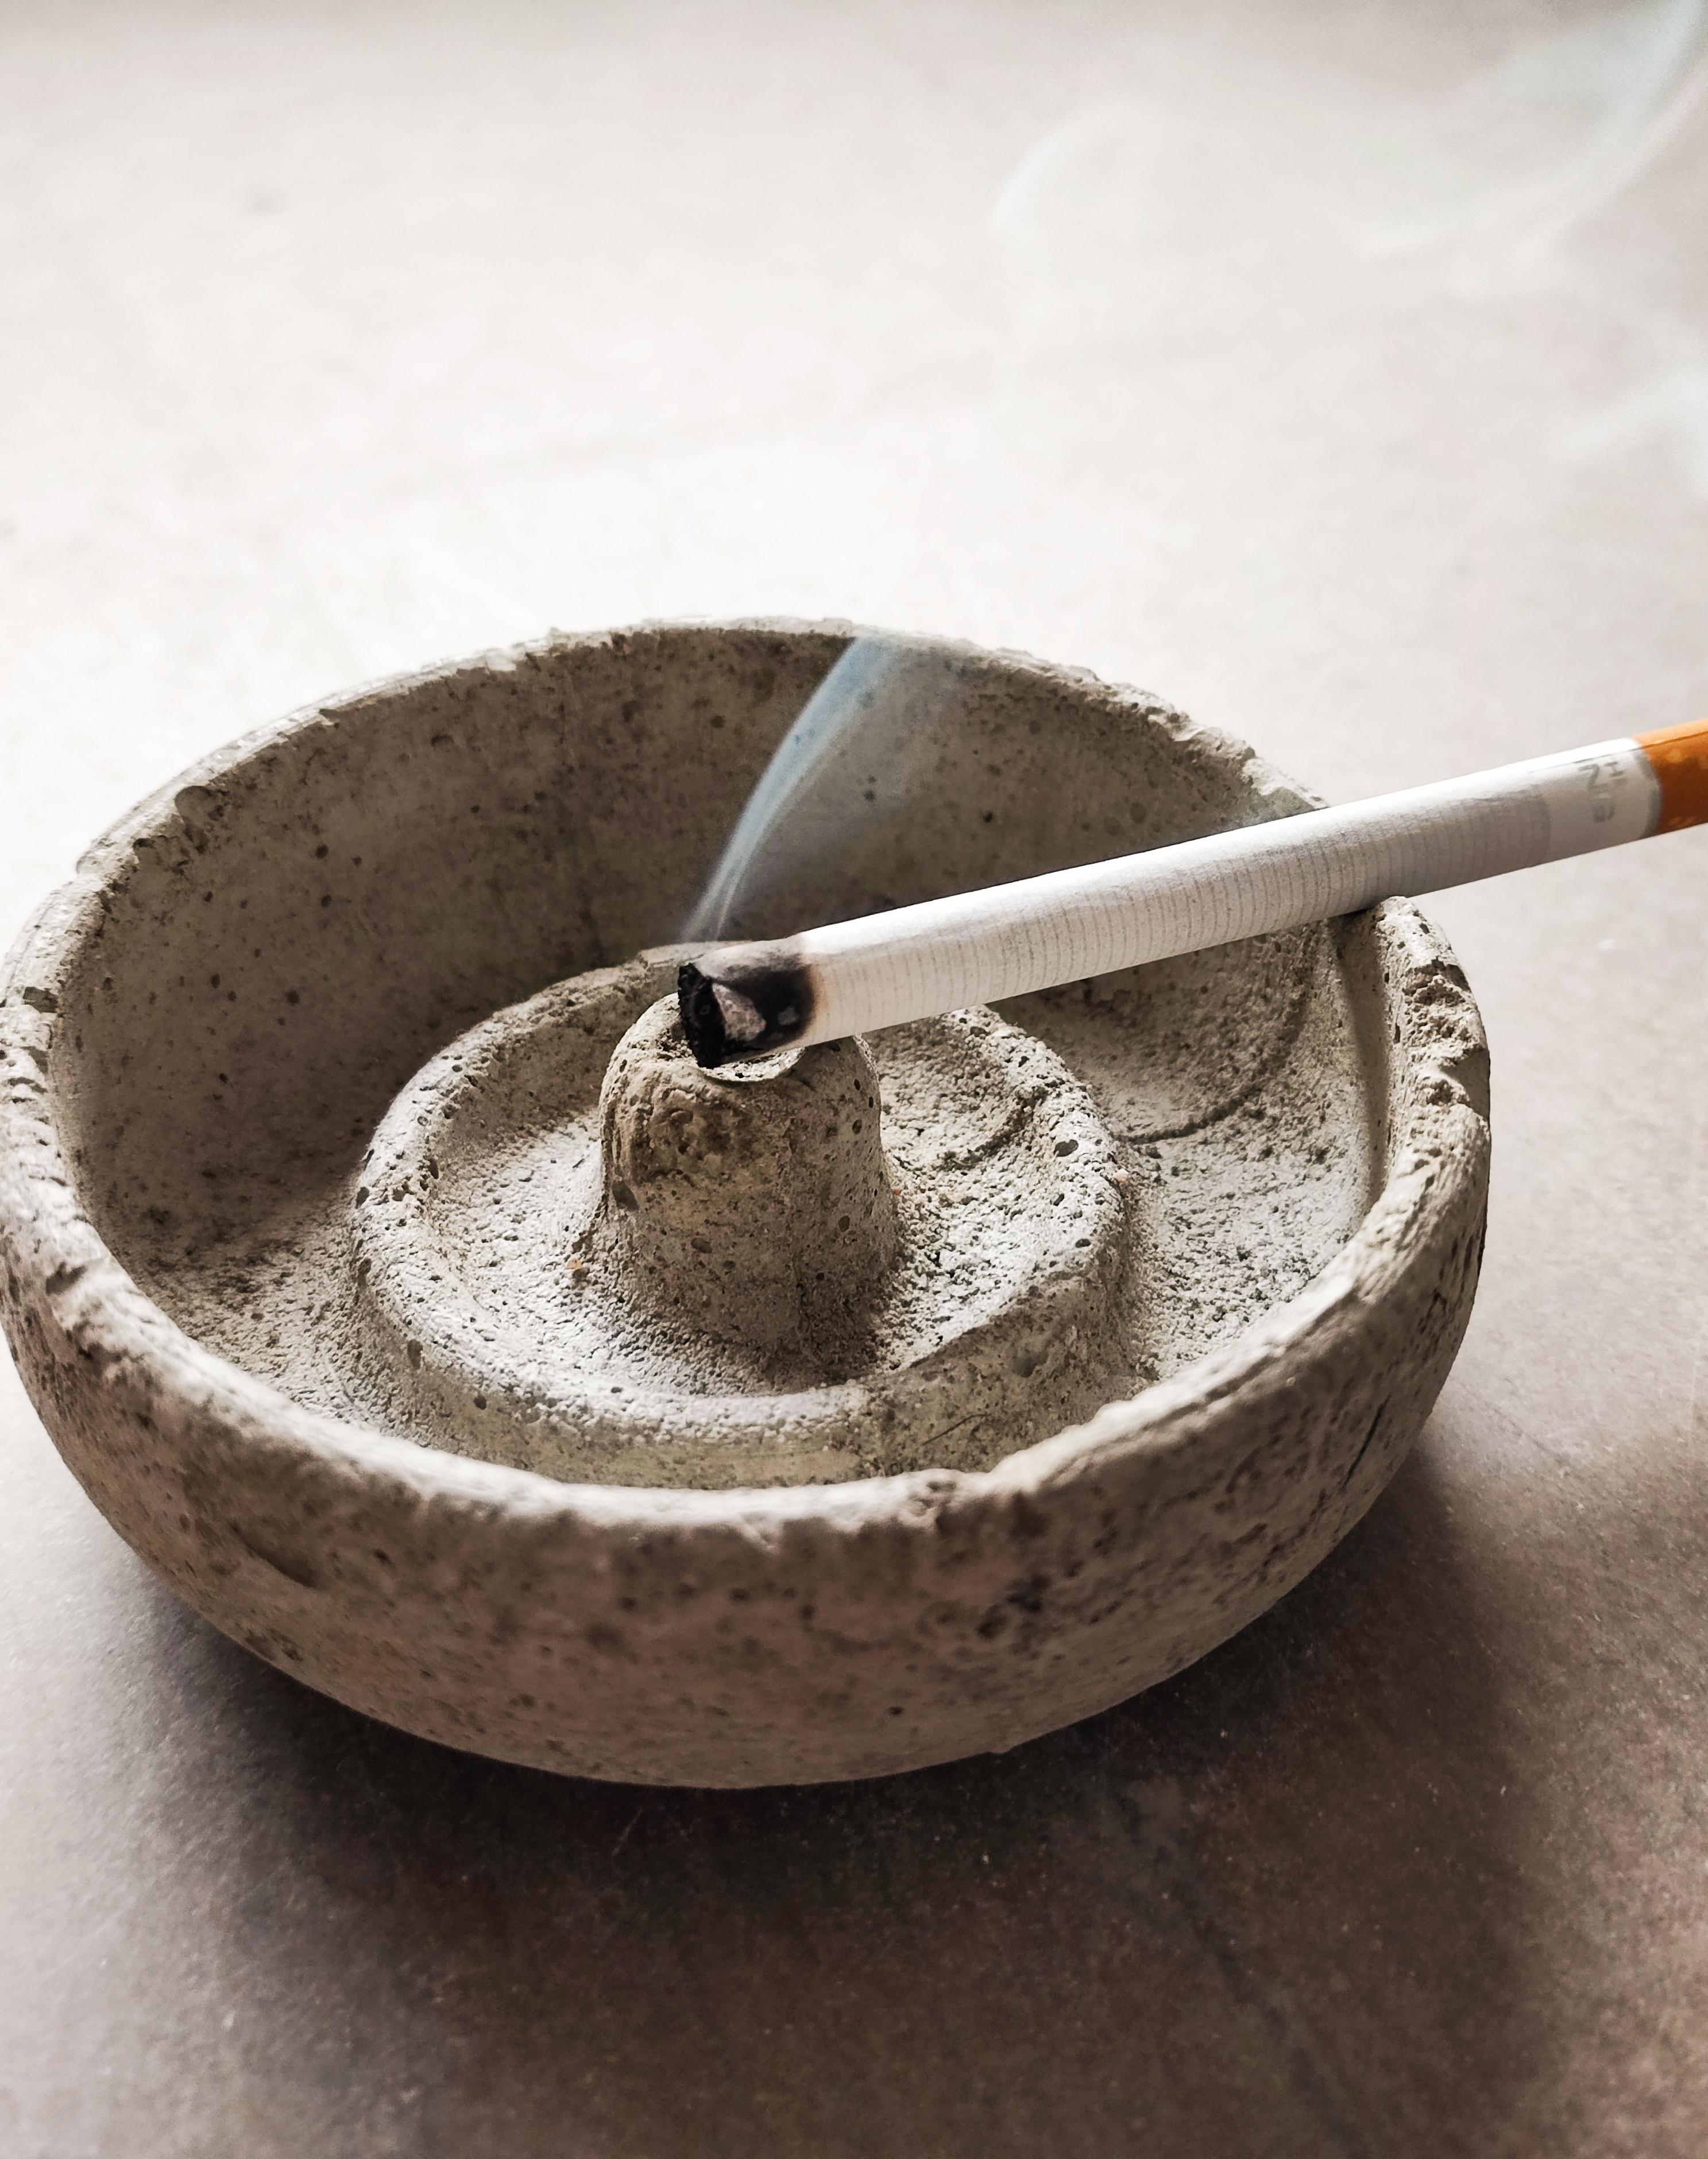 Drop | Cement ashtray 3d model